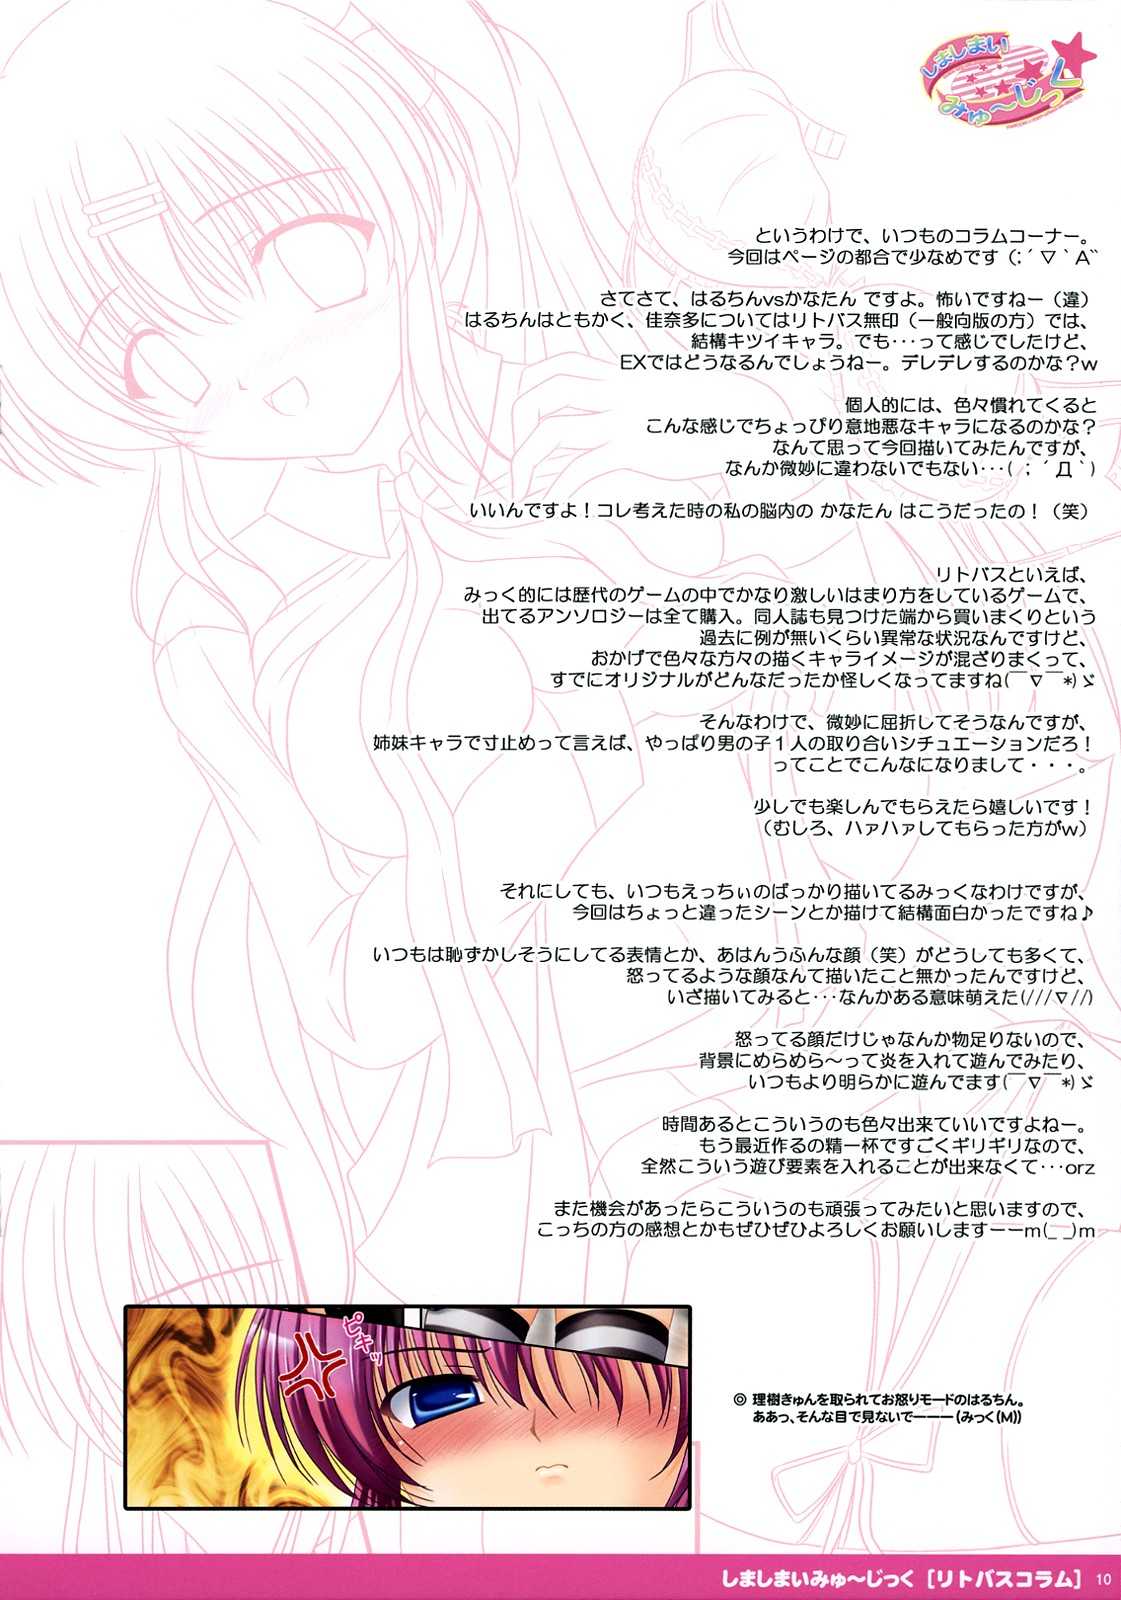 (C74) [PASTEL WING (Kisaragi-MIC/Takopi)] Shima Shimai Music (Little Busters!/Fortune Arterial) (C74) [PASTEL WING (如月みっく/たこぴ)] しましまいみゅ～じっく (リトルバスターズ！/FORTUNE ARTERIAL)